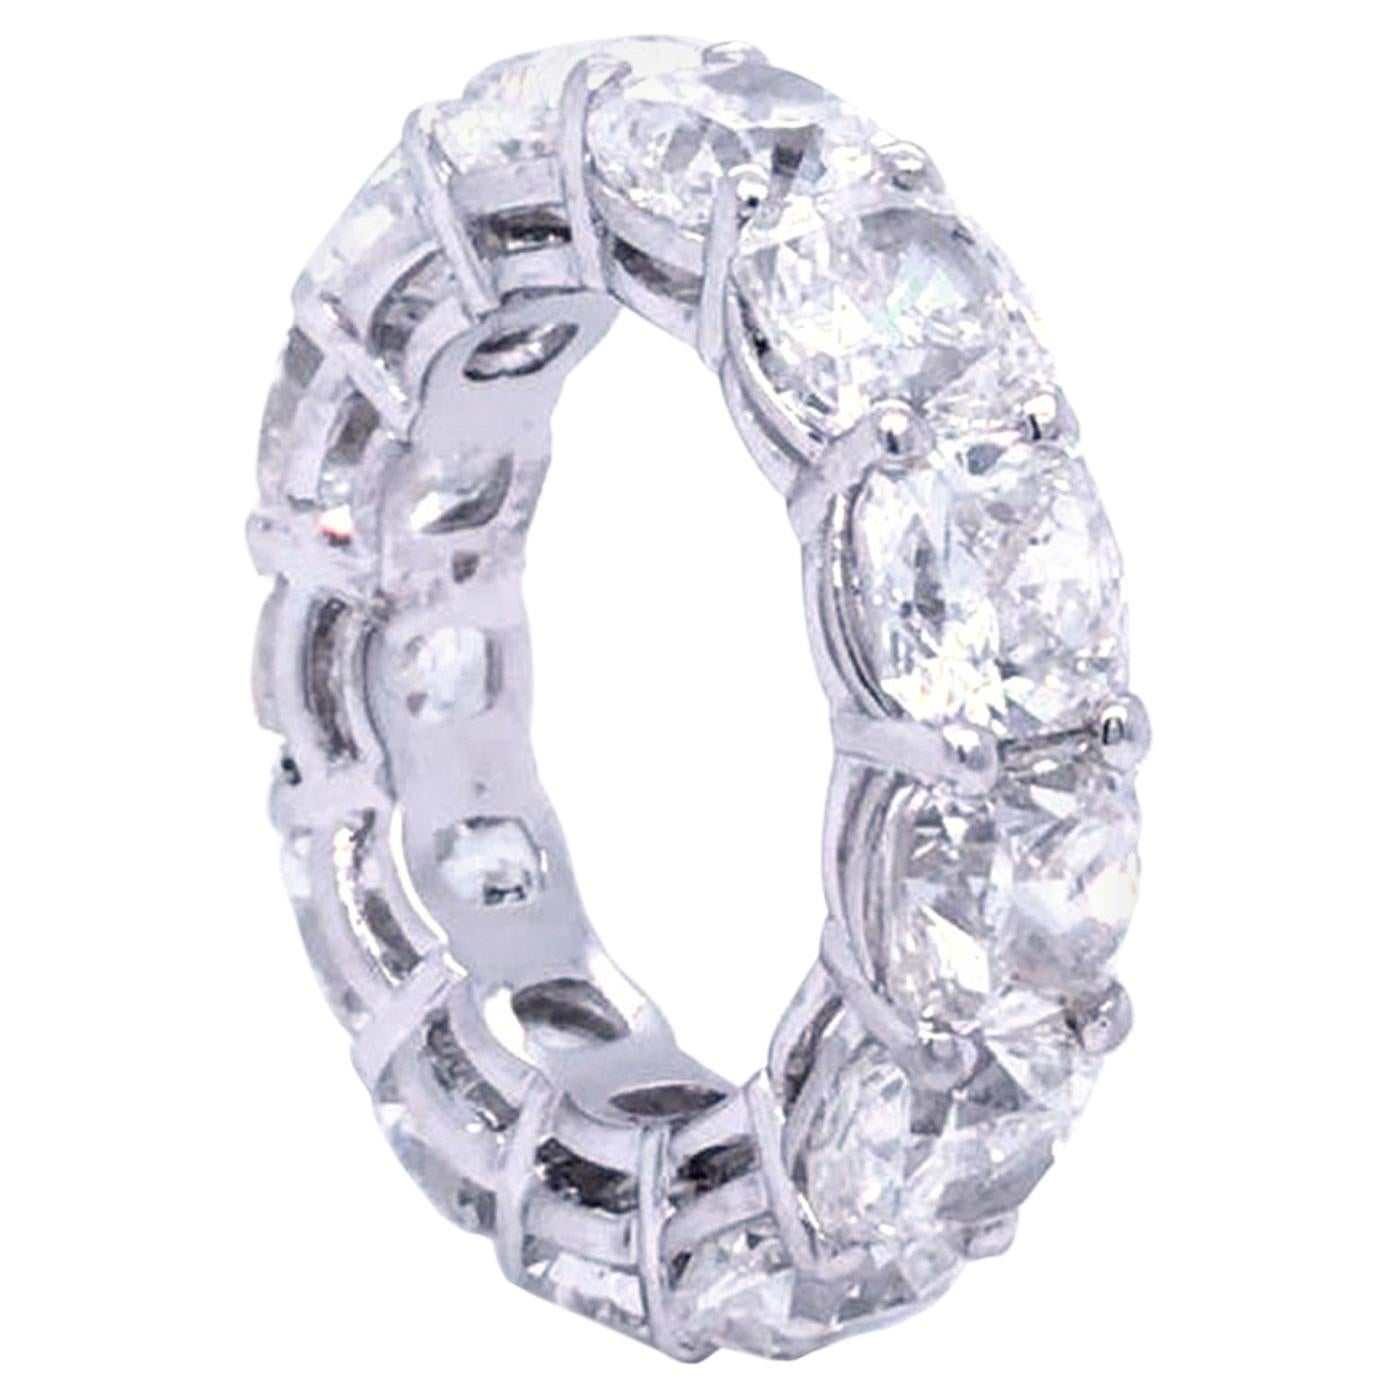 13.39 Carat Cushion Cut Diamond Eternity Band Prong Wedding Platinum Ring VS2